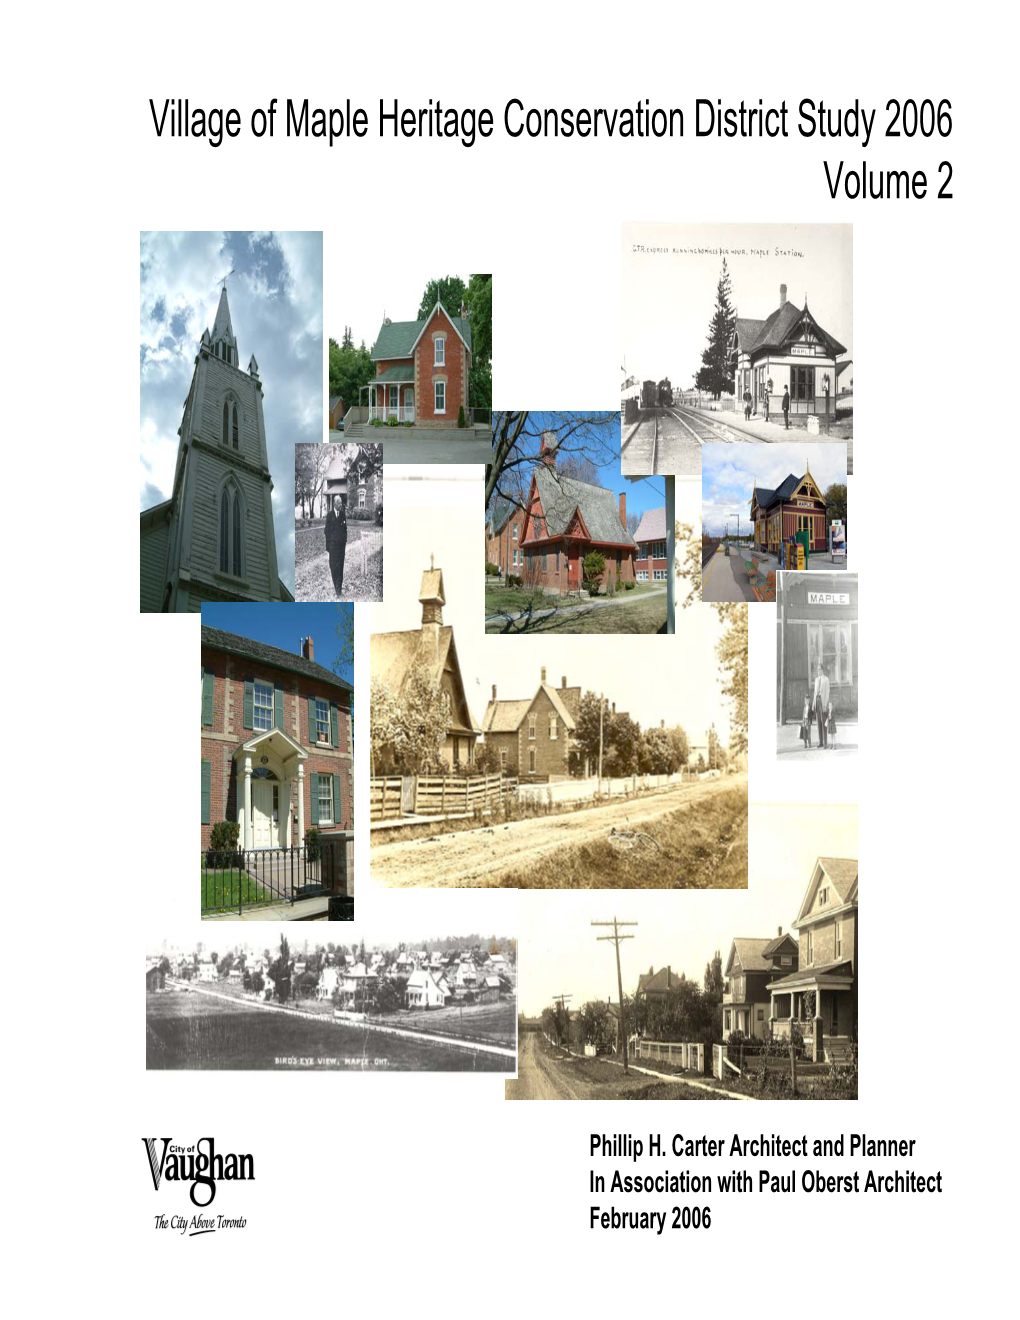 Maple Heritage Conservation District Study 2006 Volume 2